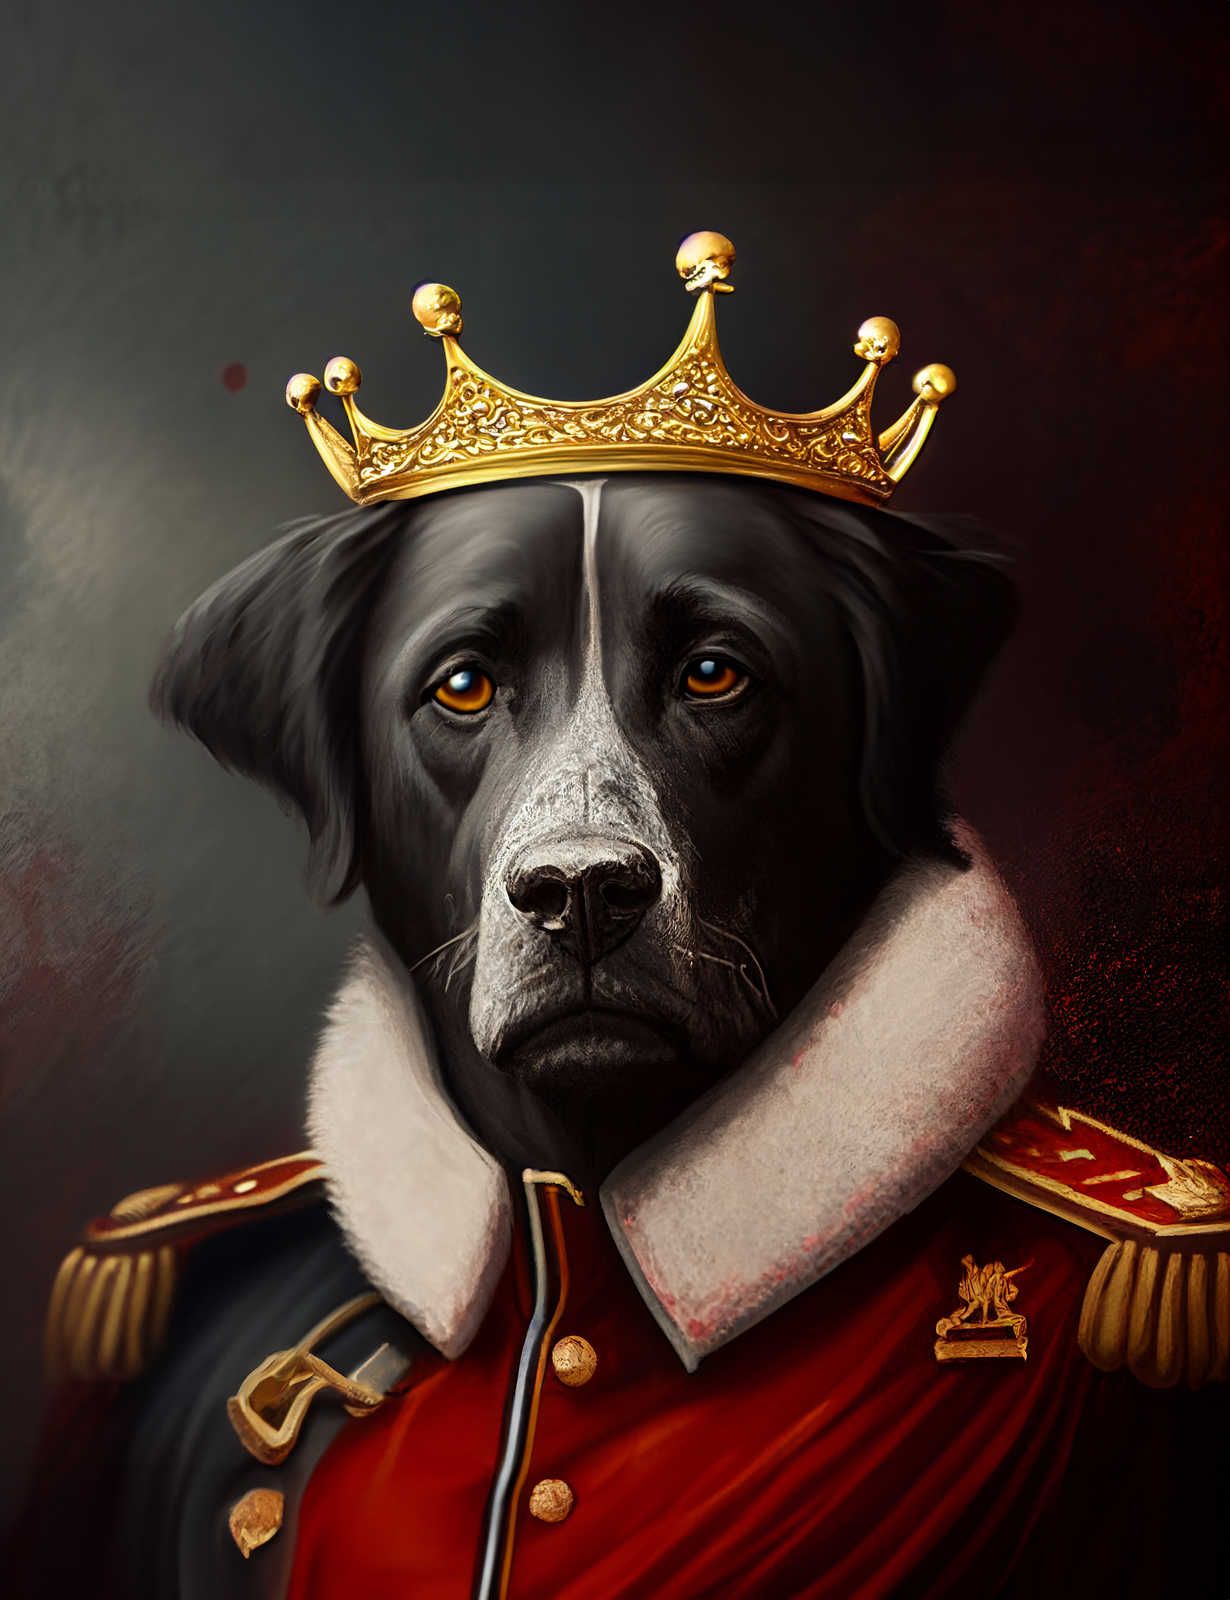             Toile KI »Royal Dog« - 80 cm x 120 cm
        